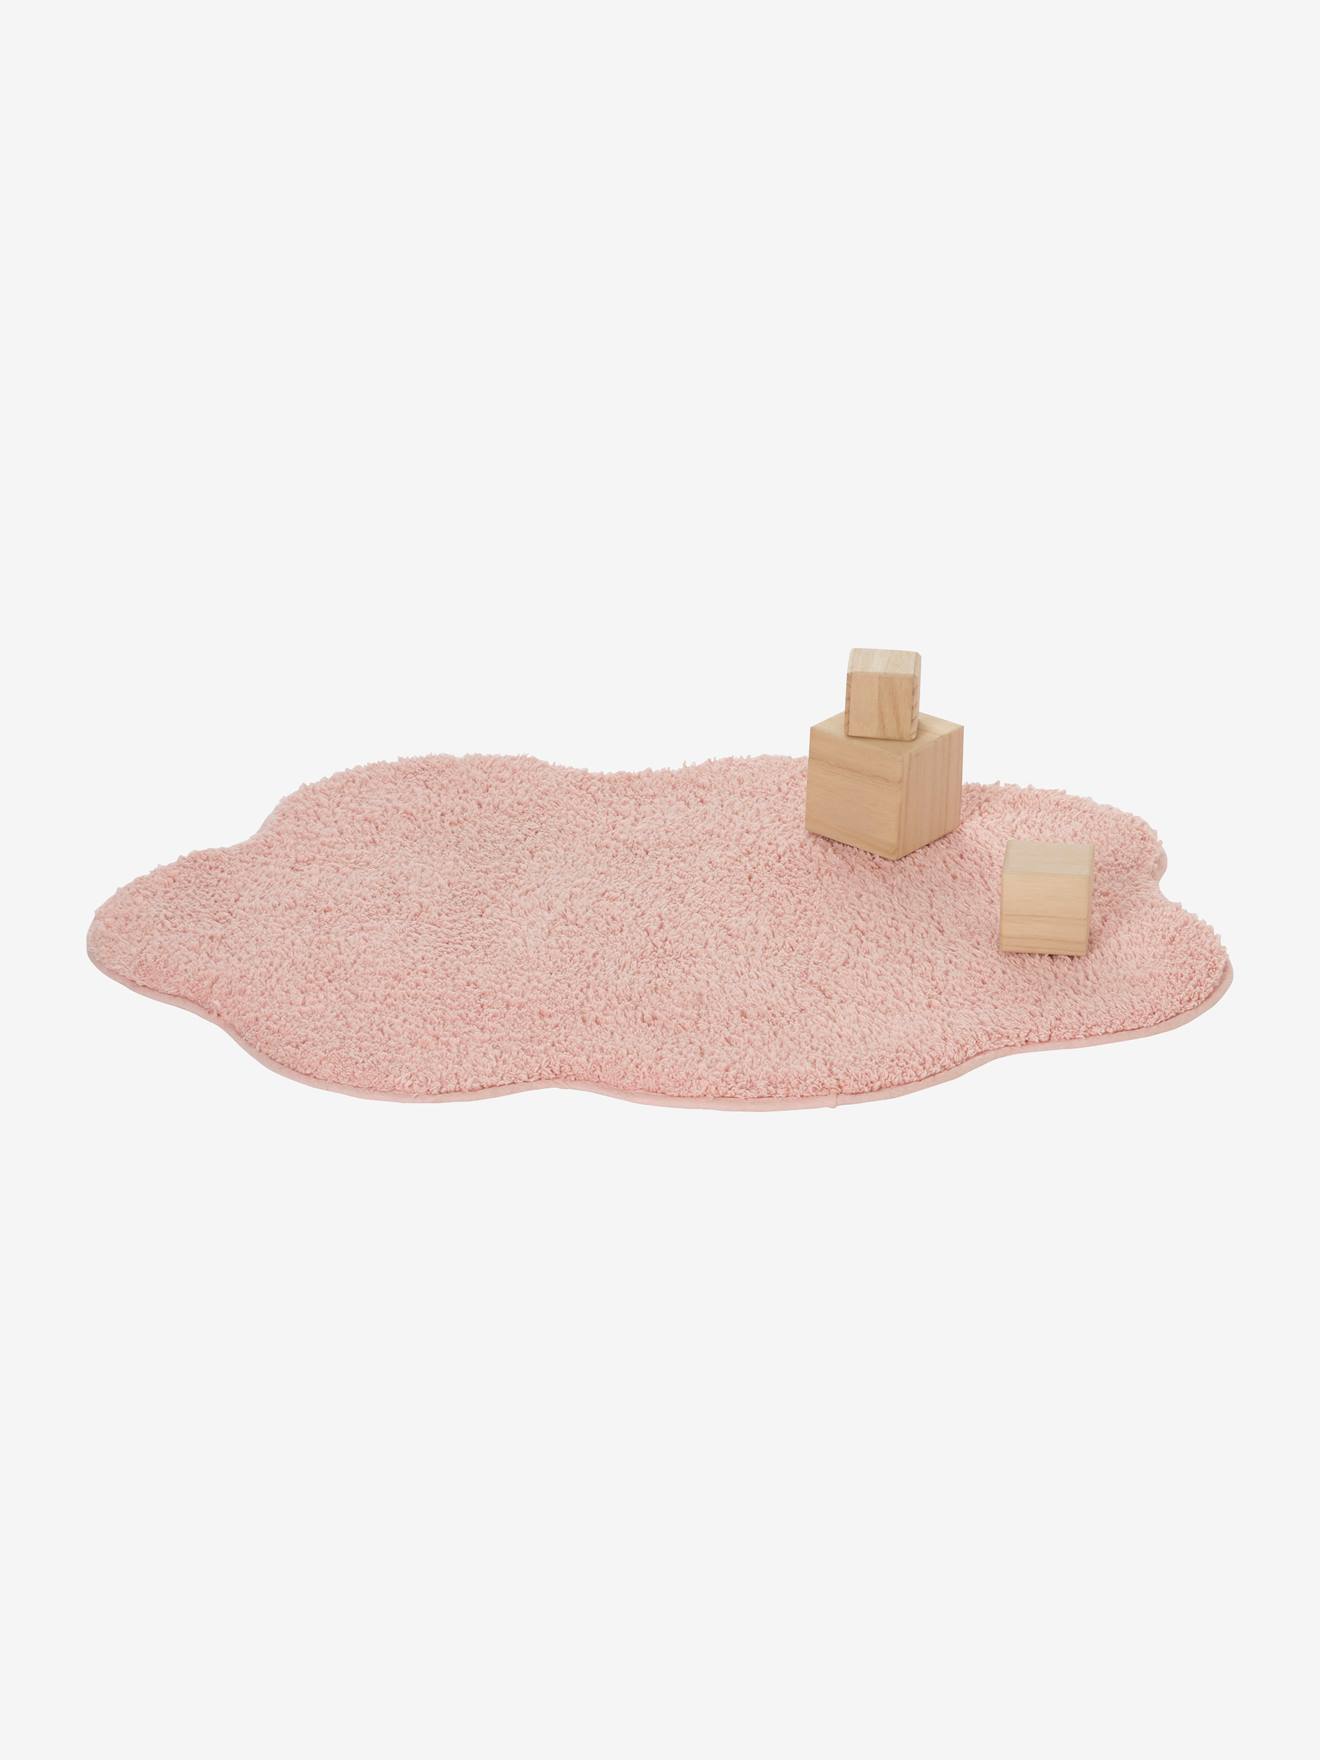 Wolkmat voor babykamer, thema "poesje mauw" zacht roze